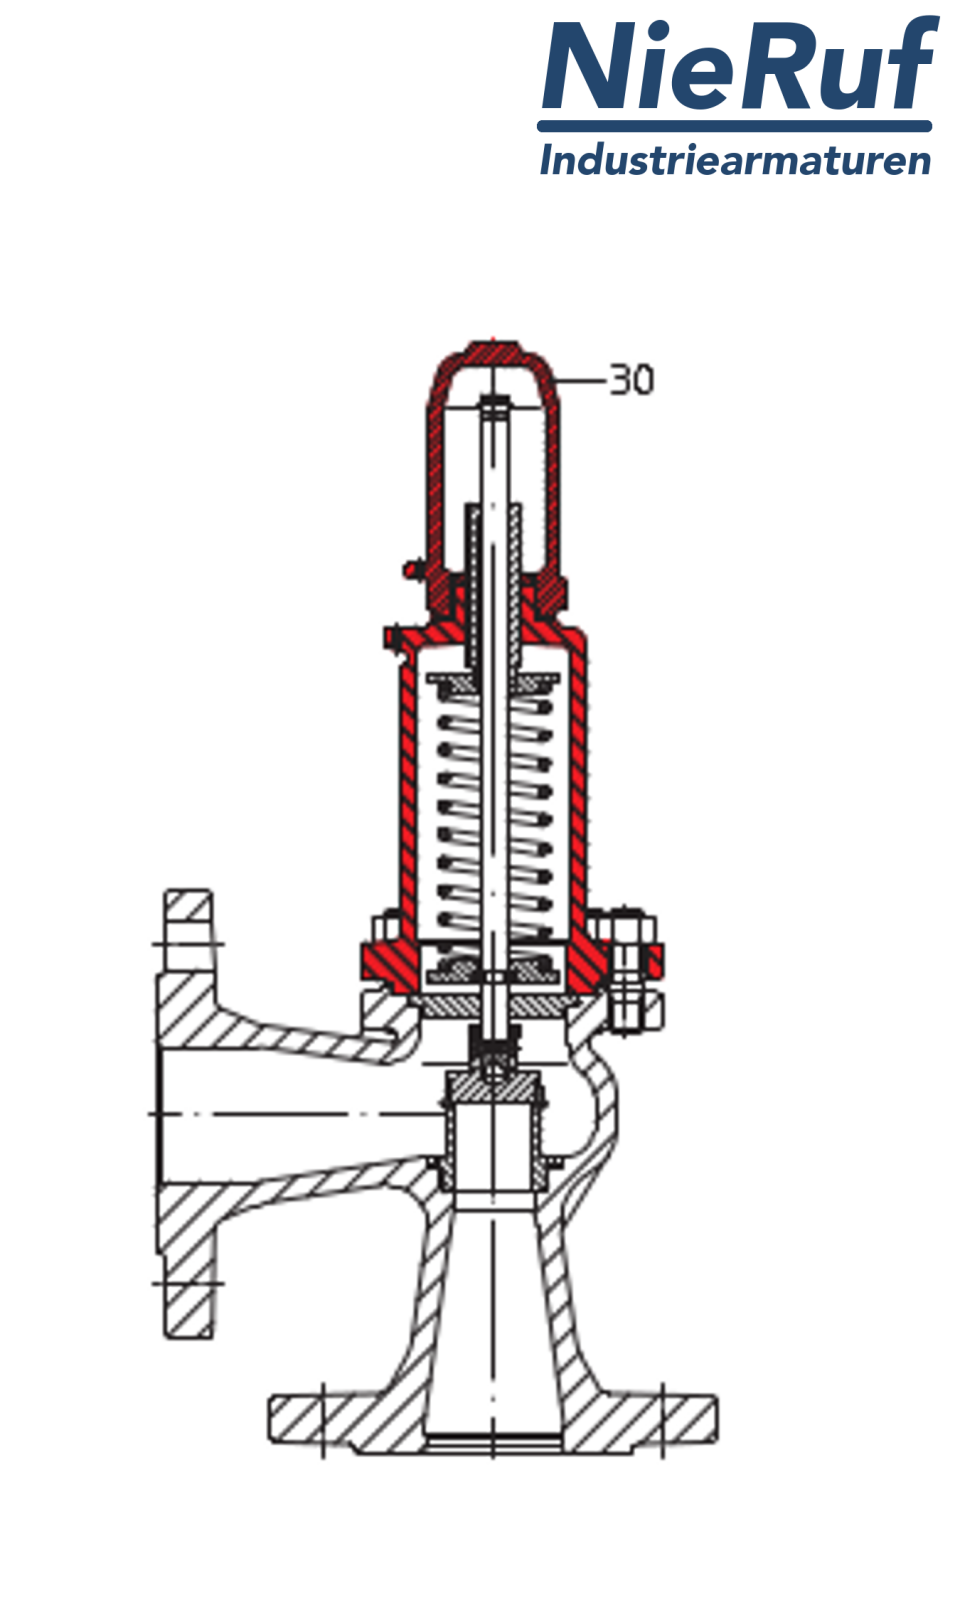 flange-safety valve DN40/DN40 SF0201, cast steel 1.0619+N FPM, without lever